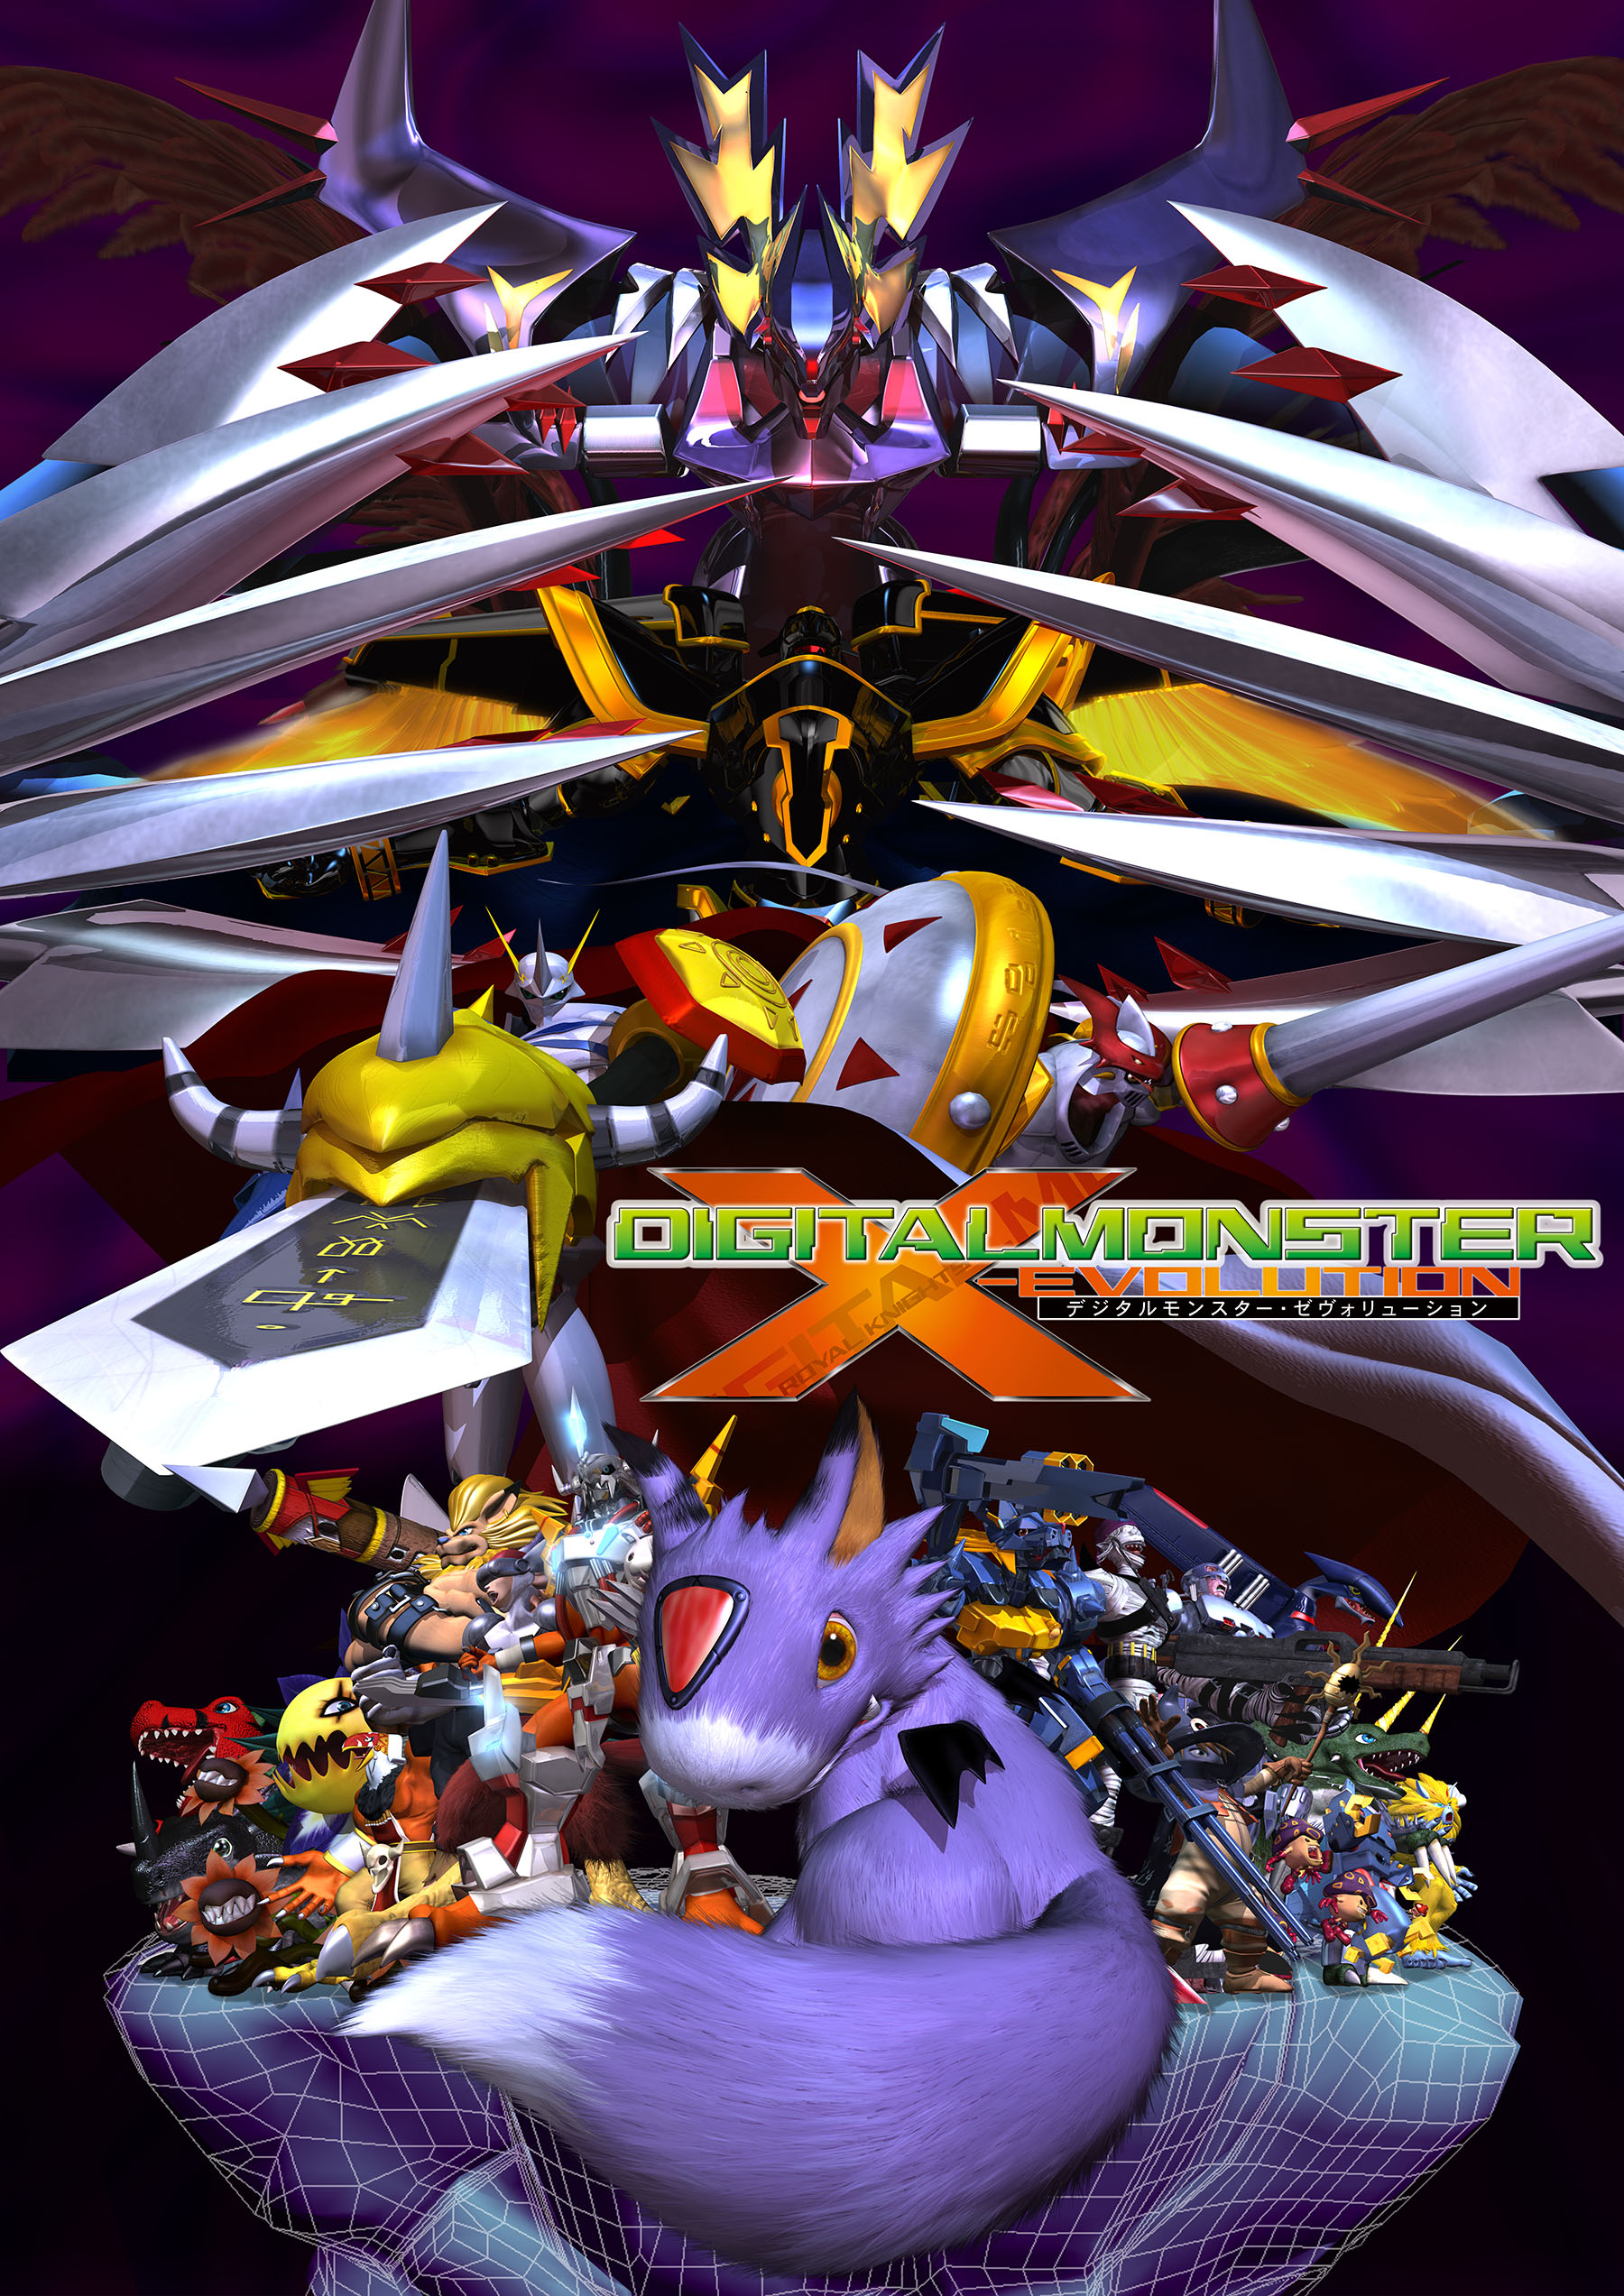 Digimons Inicias - Digital Monster